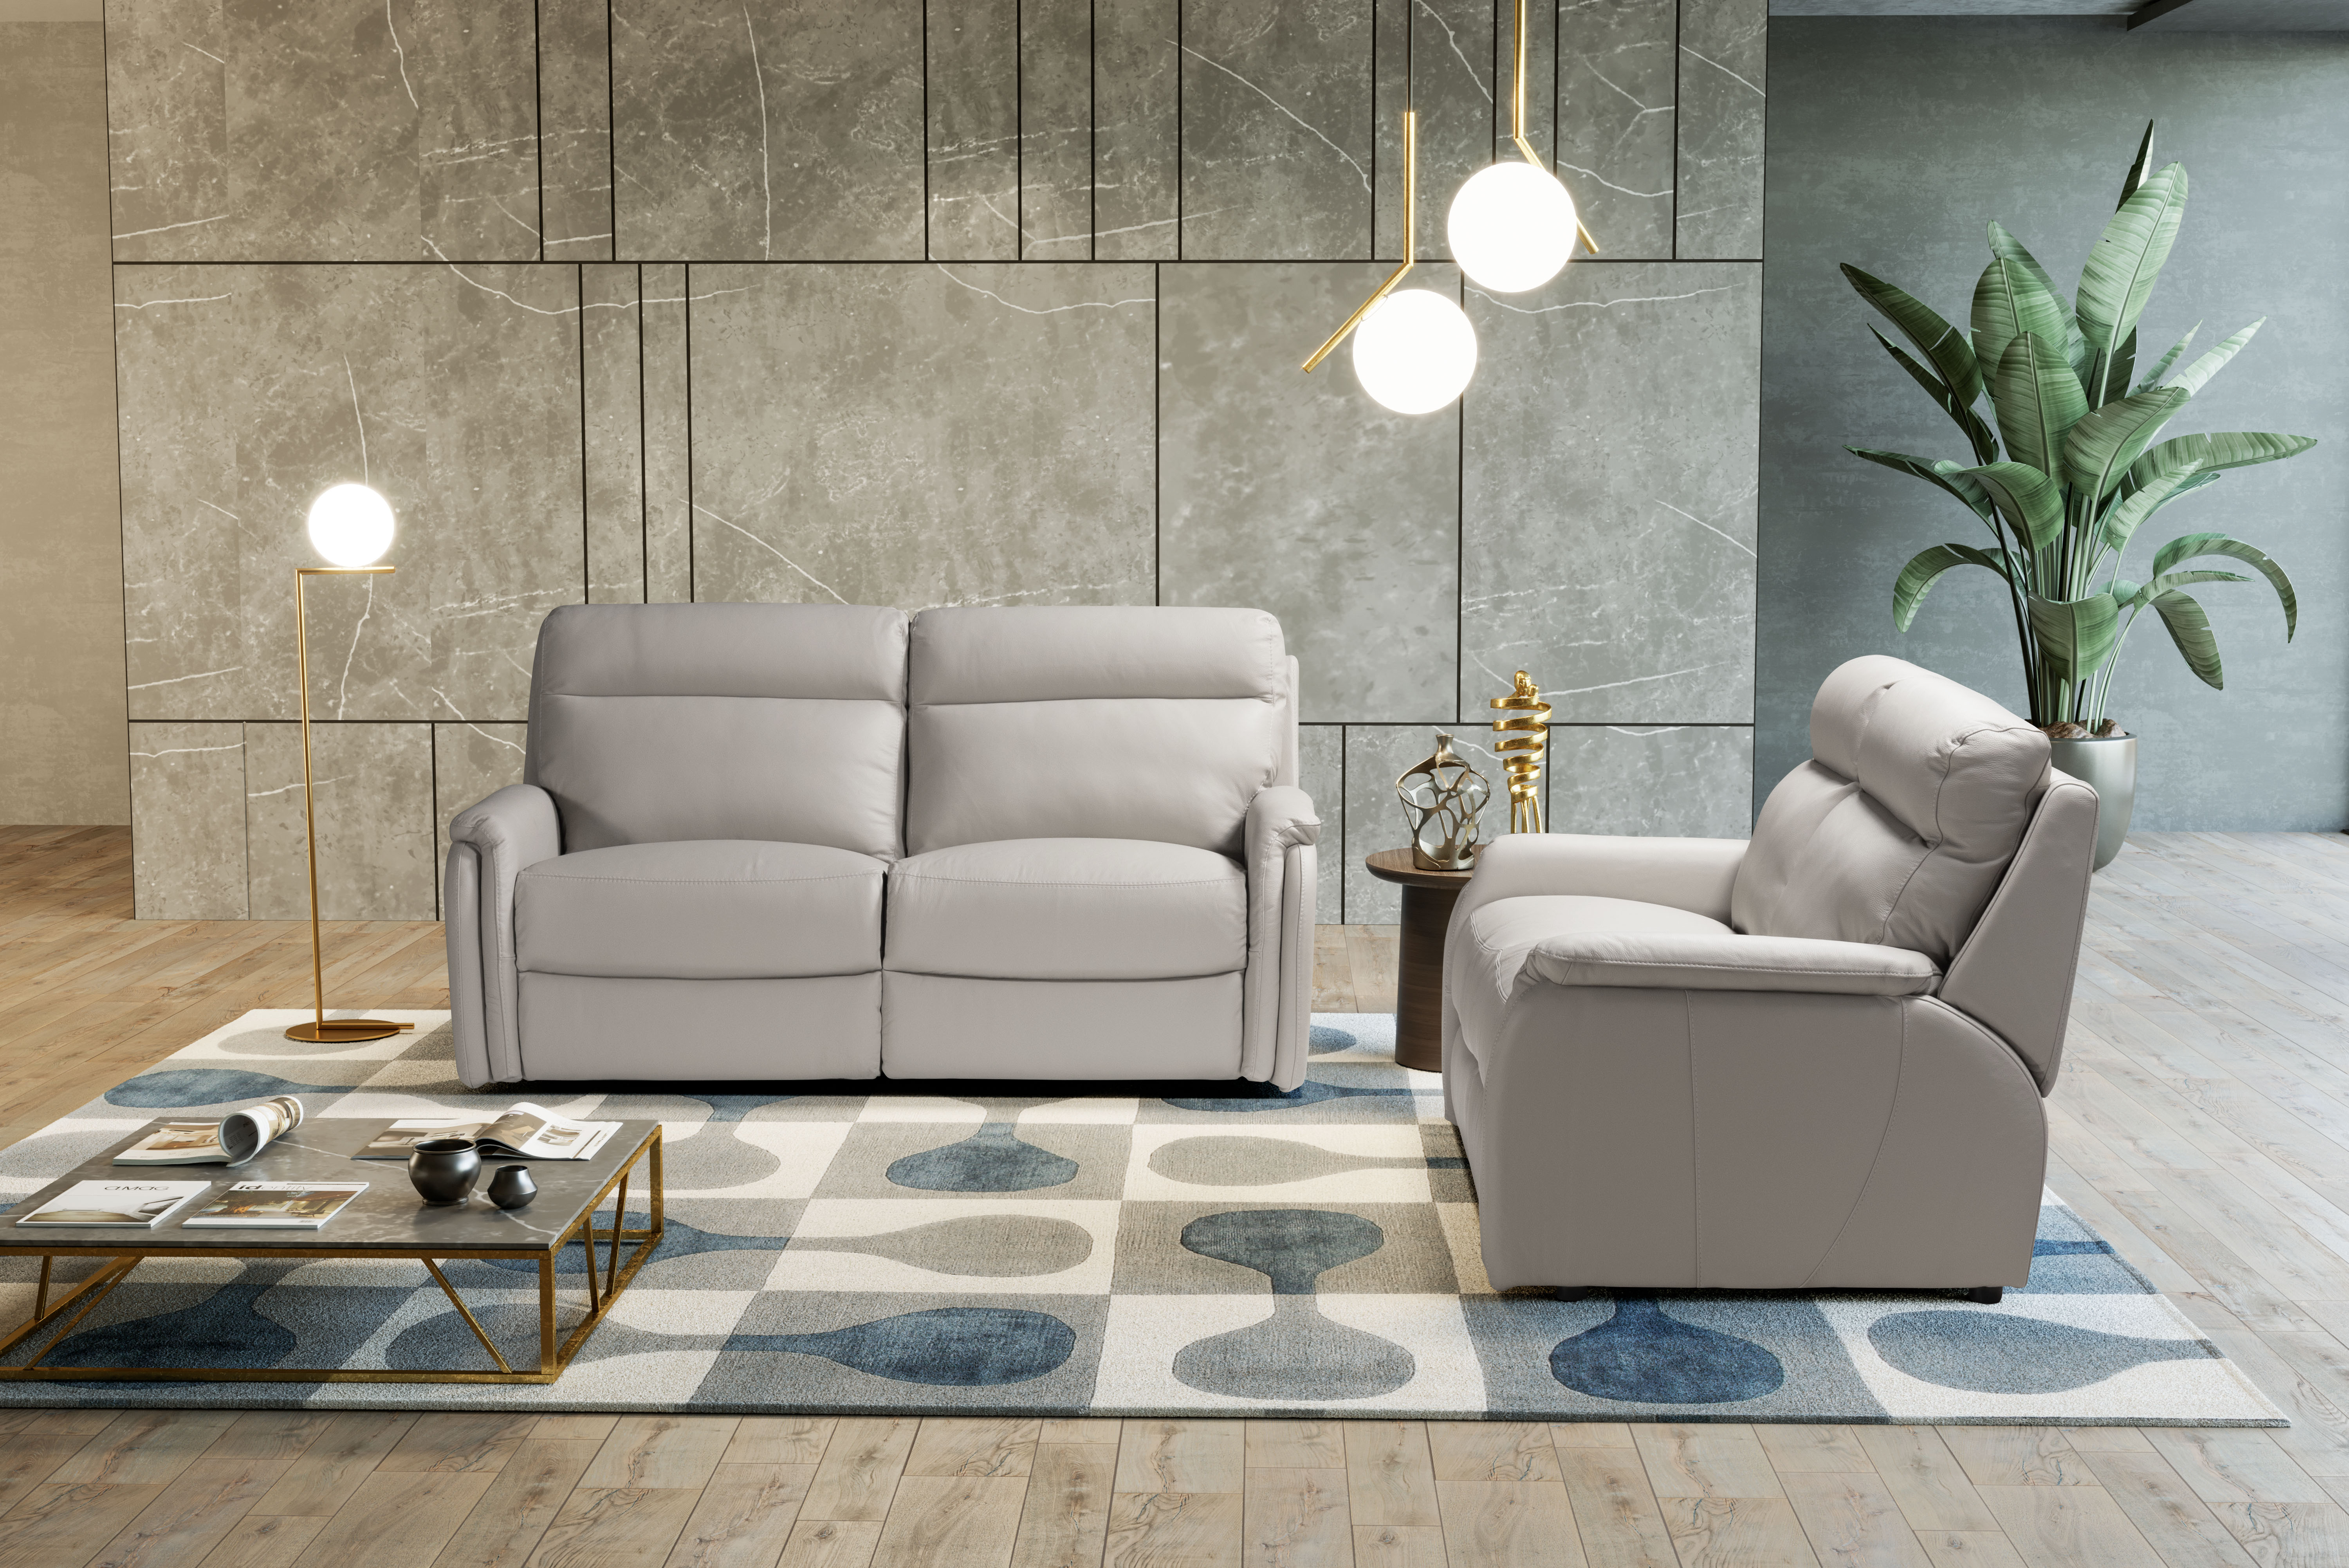 FOX Italian Leather Recliner 3 & 2 Seat Sofa by Galieri - Cenere Light Grey - Image 4 of 4